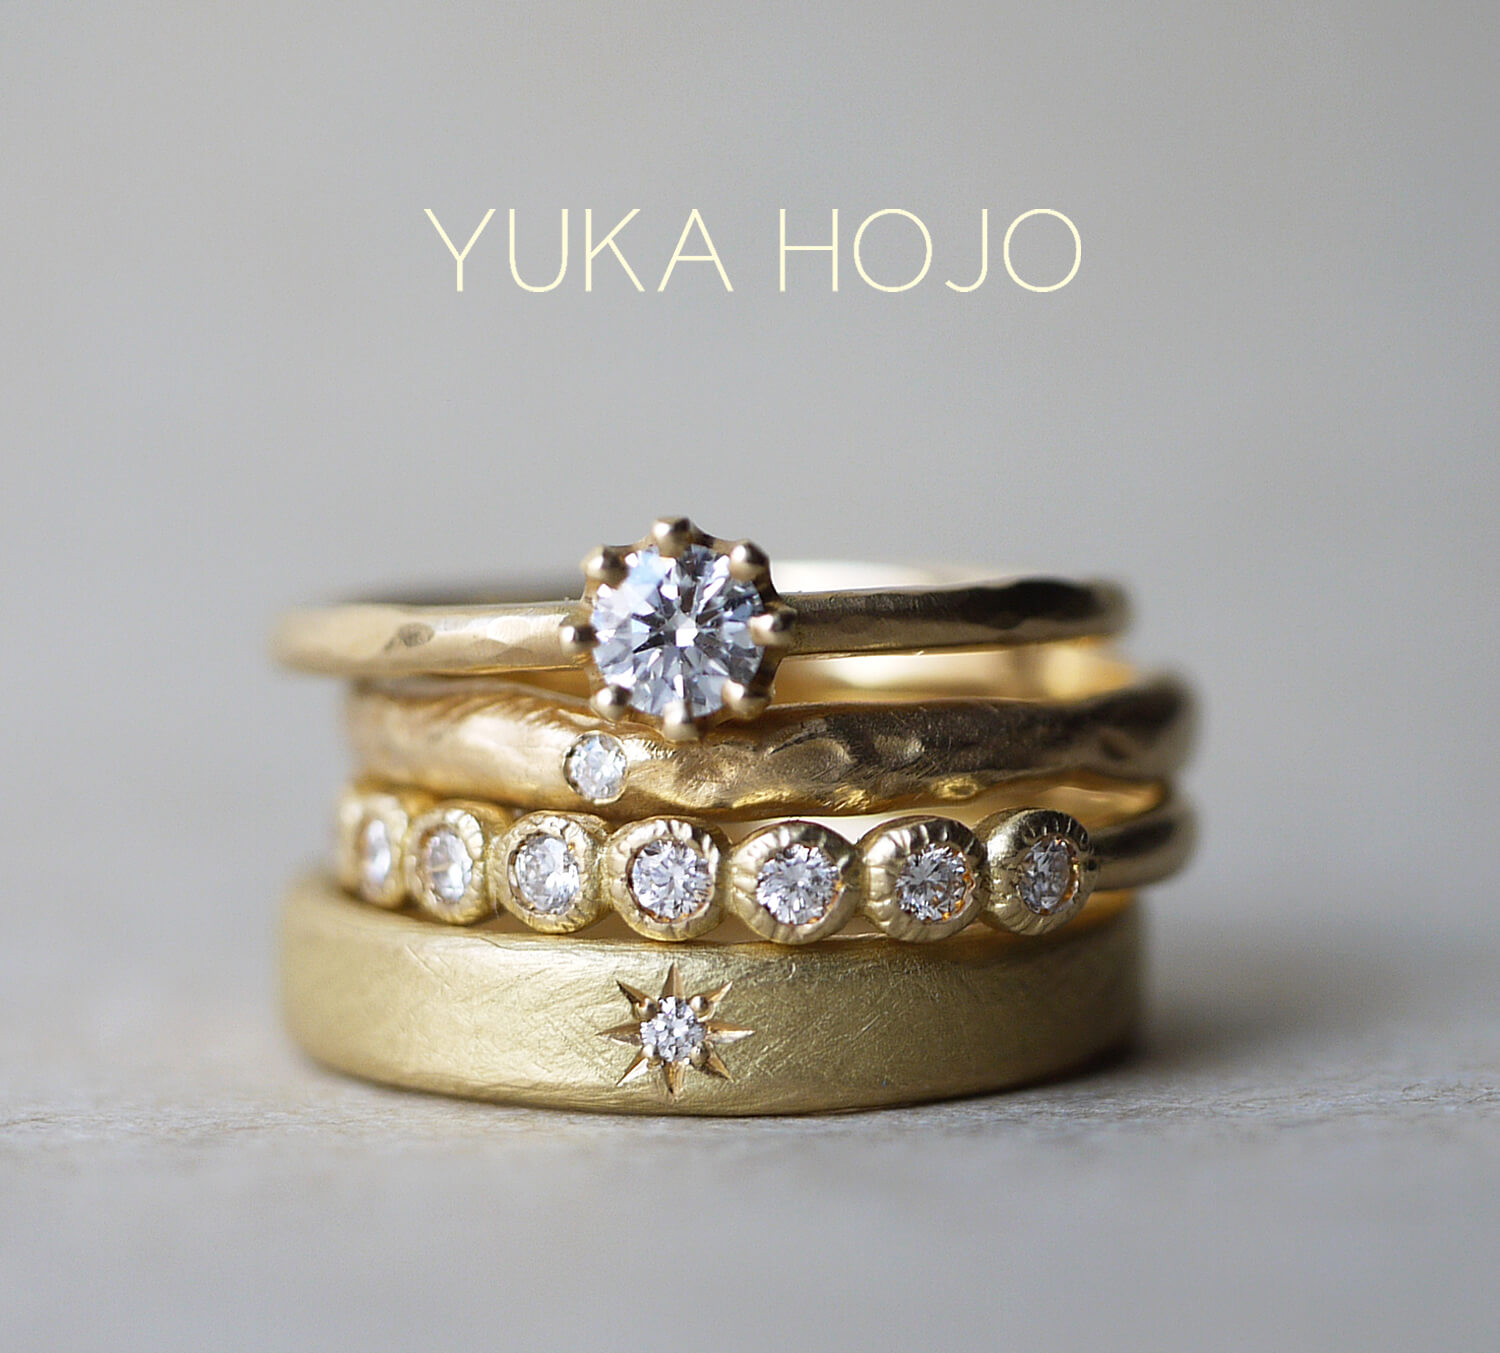 YUKAHOJOユカホウジョウの婚約指輪と結婚指輪